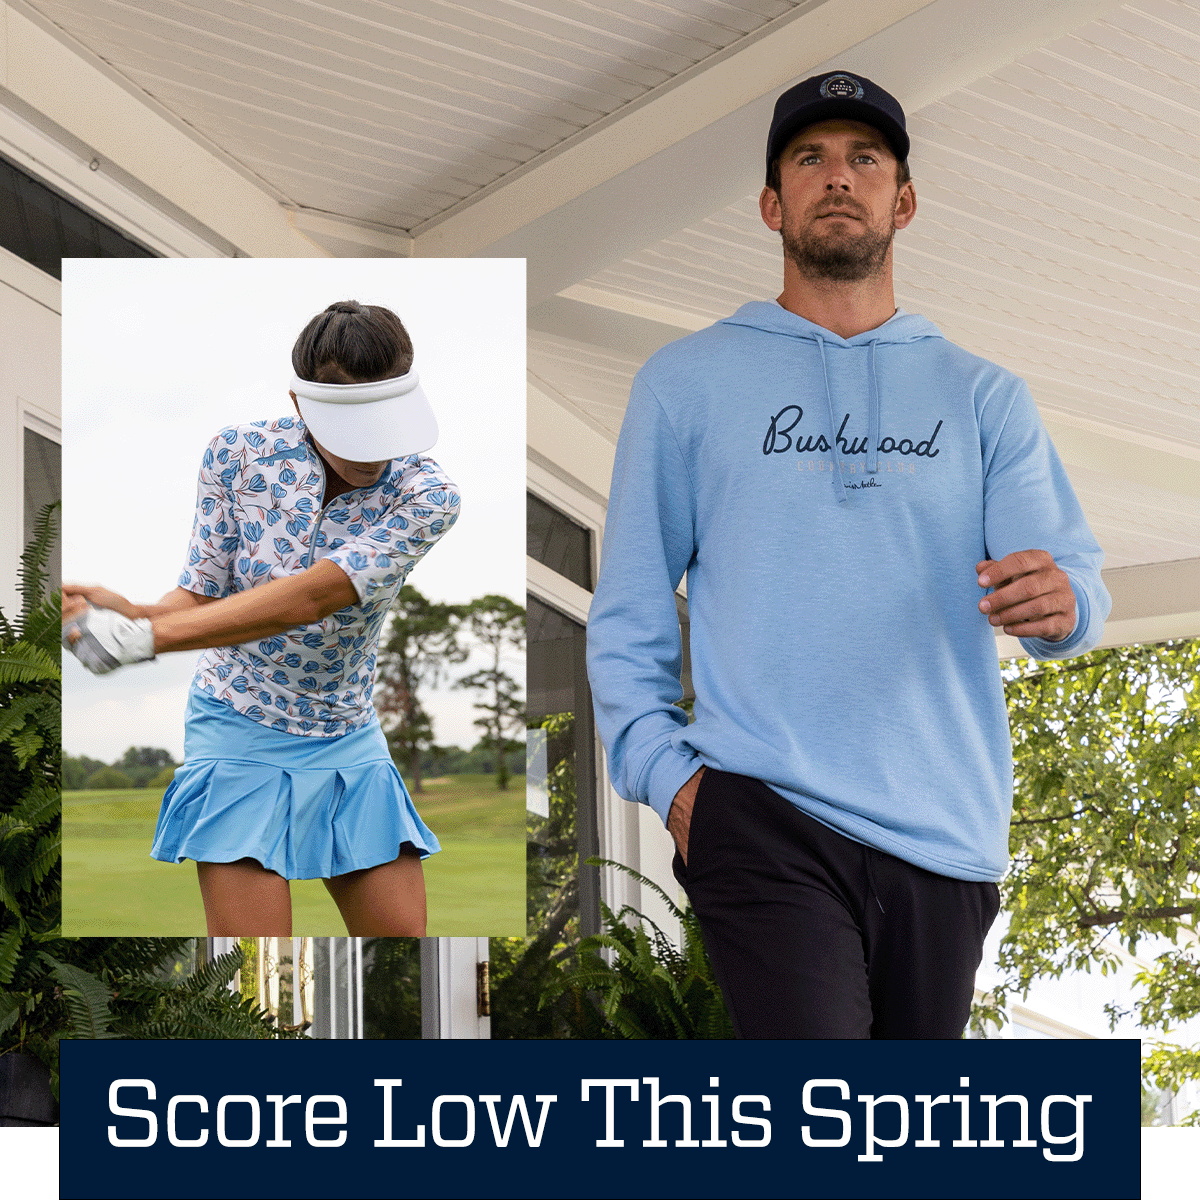 Score low this spring.